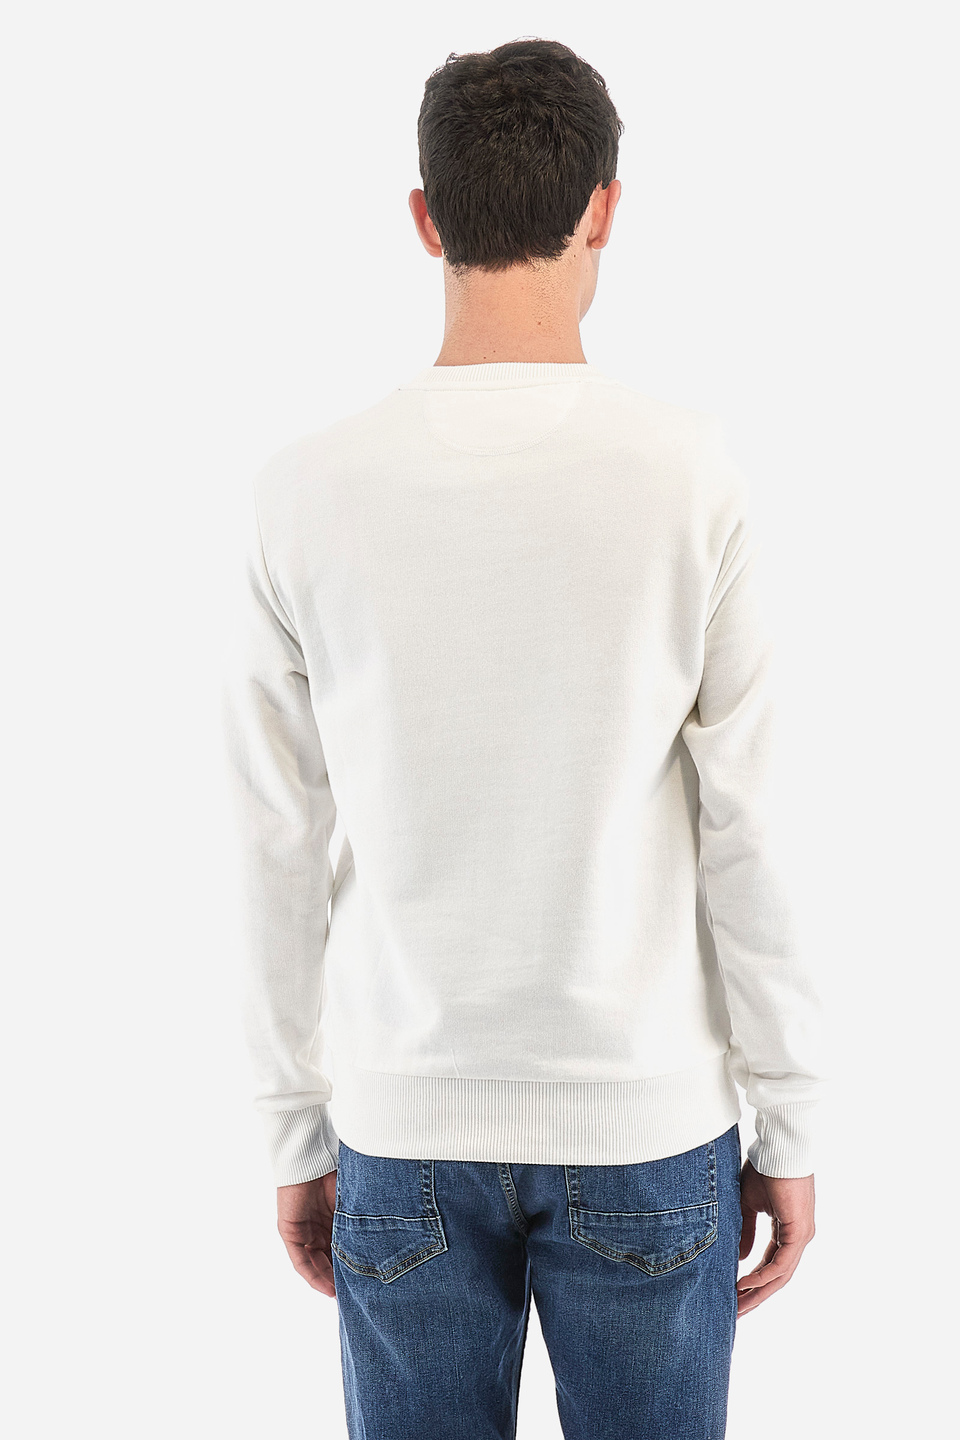 Regular-Fit-Pullover für Herren | La Martina - Official Online Shop